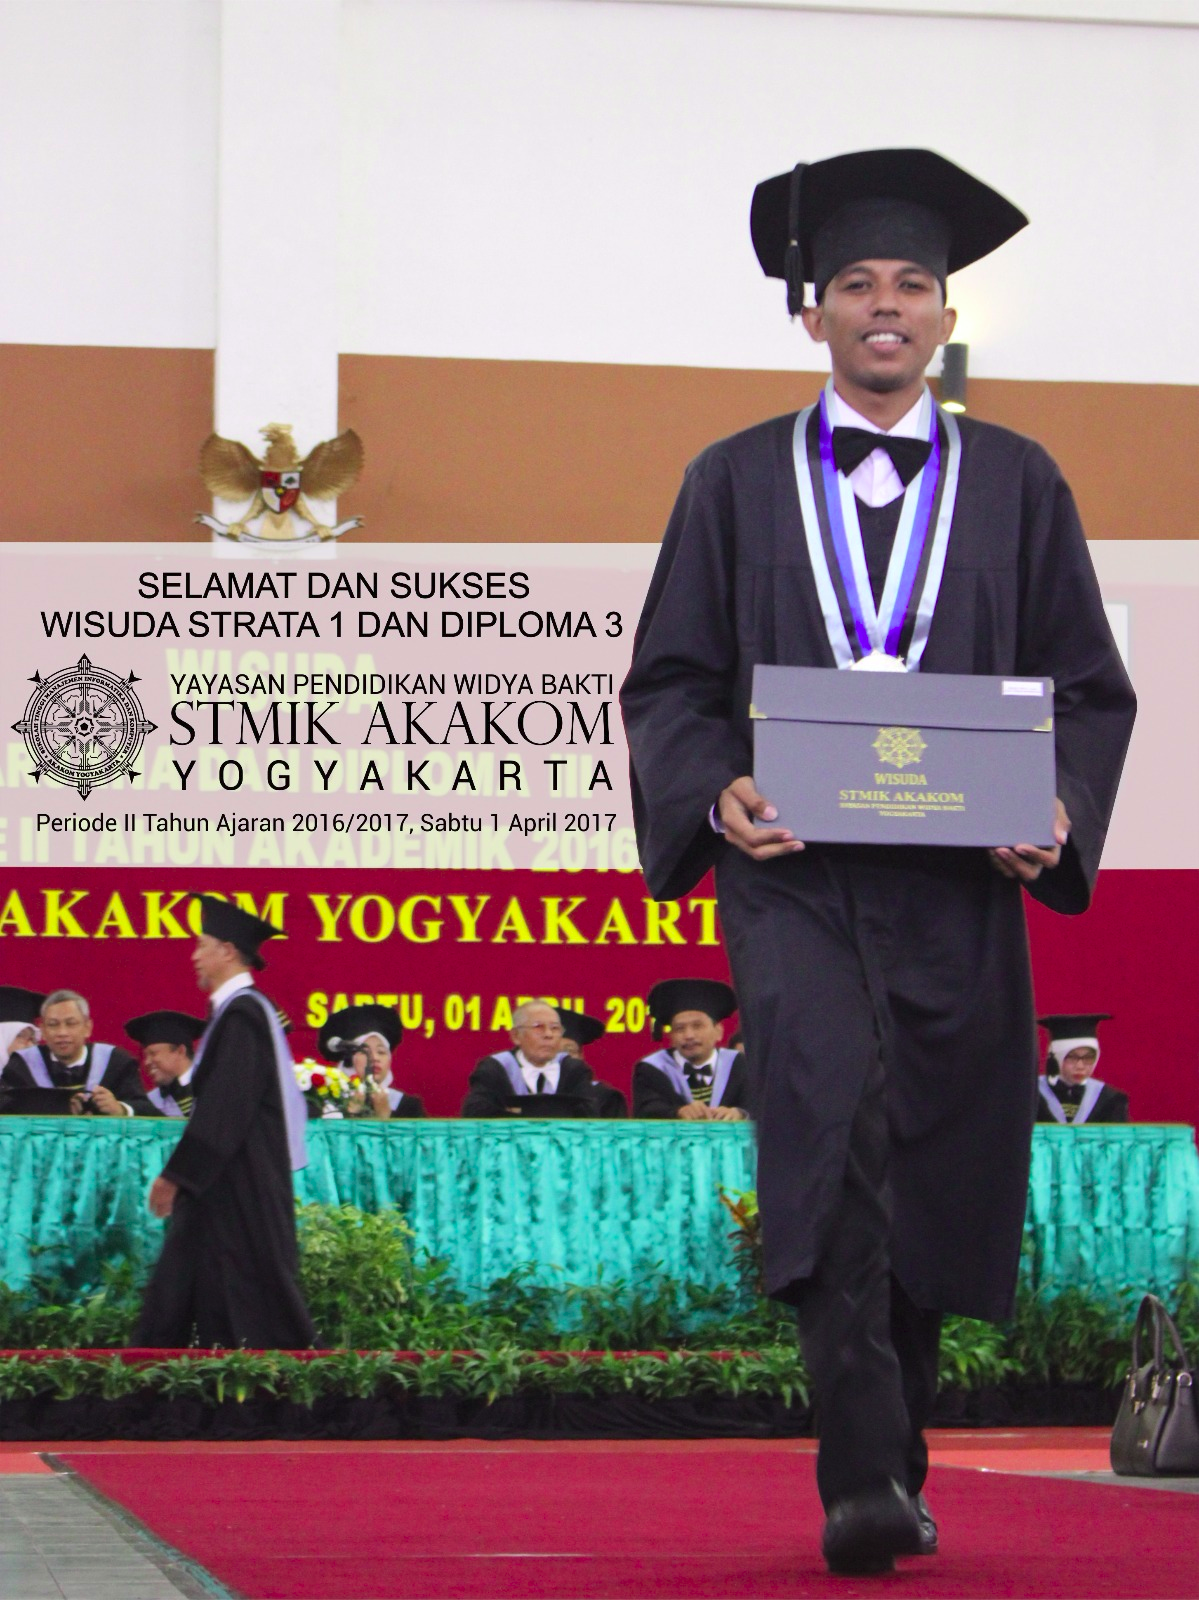 Wisuda Diploma dan Sarjana STMIK AKAKOM Yogyakarta Periode II Tahun Ajaran 2016/2017